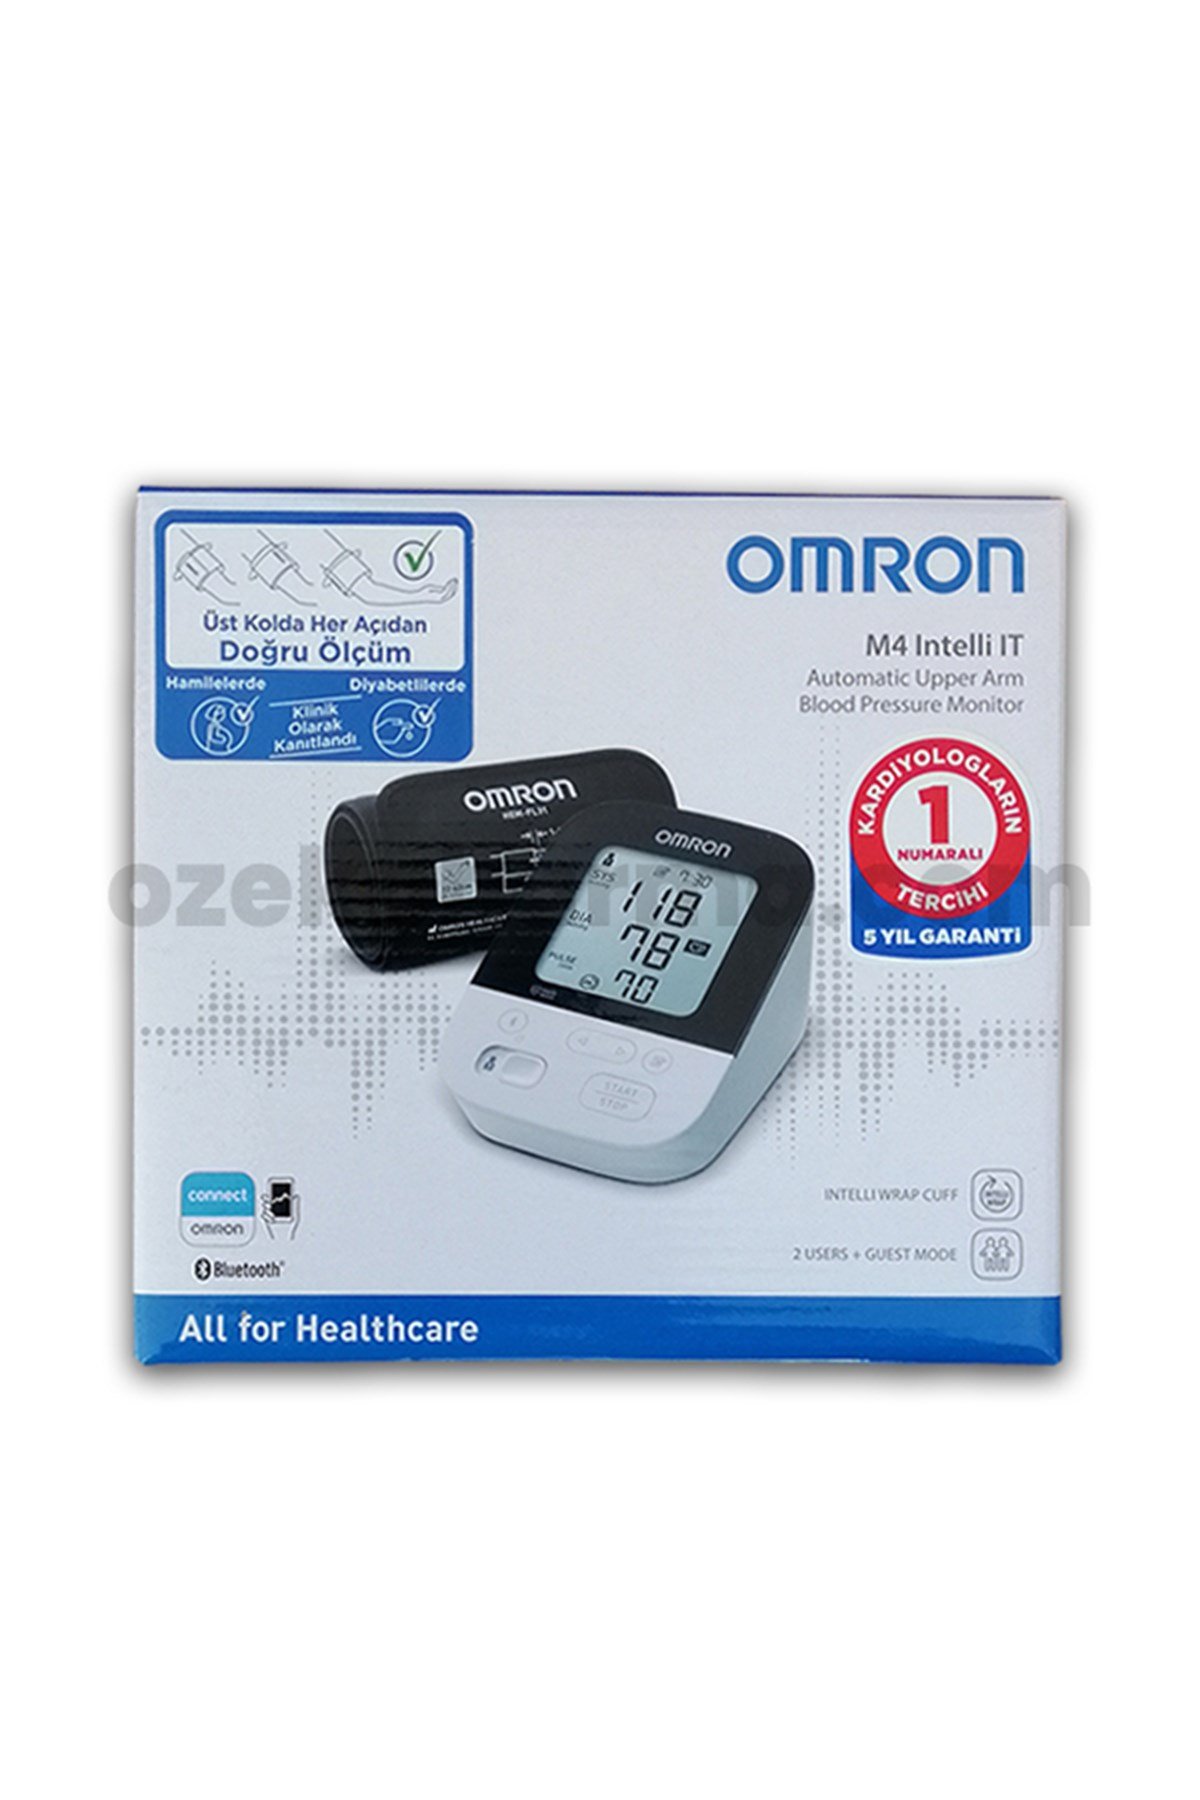 Omron M4 Intelli IT HEM-7155T-EBK-Tansiyon Aleti | ozekpharma.com